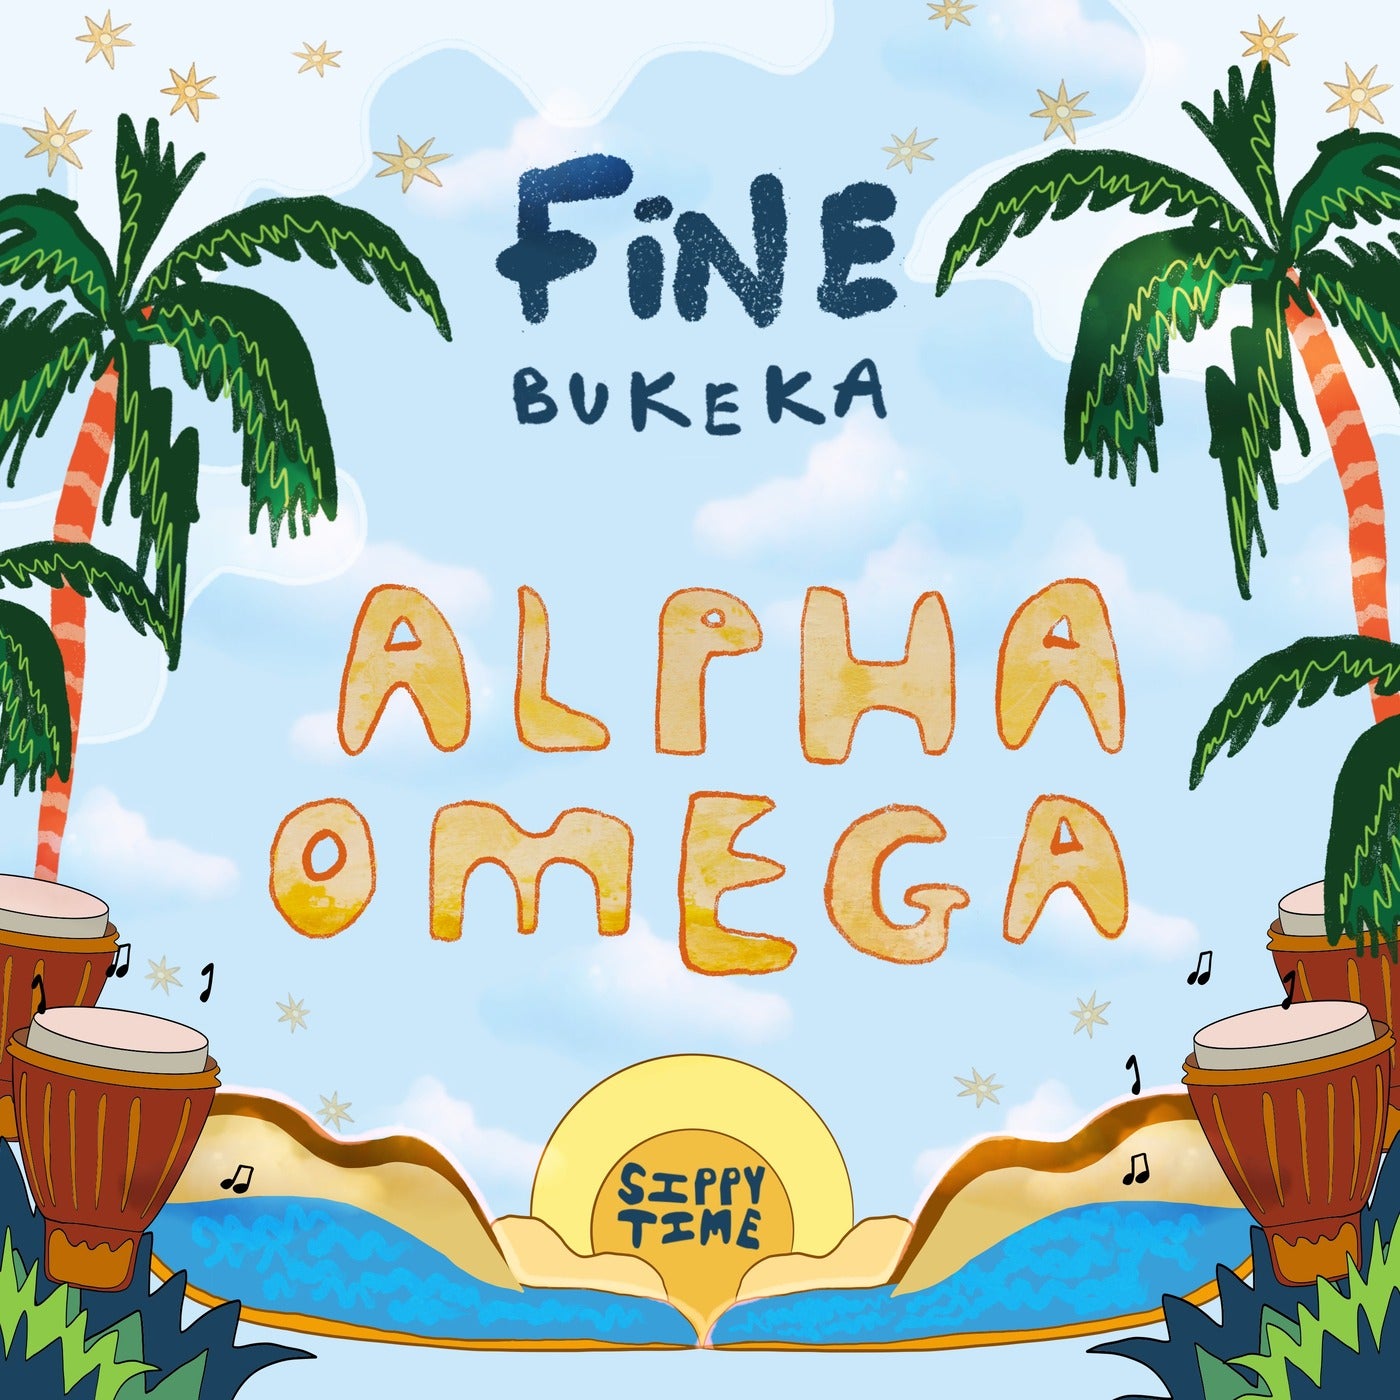 FiNE, Bukeka - Alpha Omega on Sippy Time